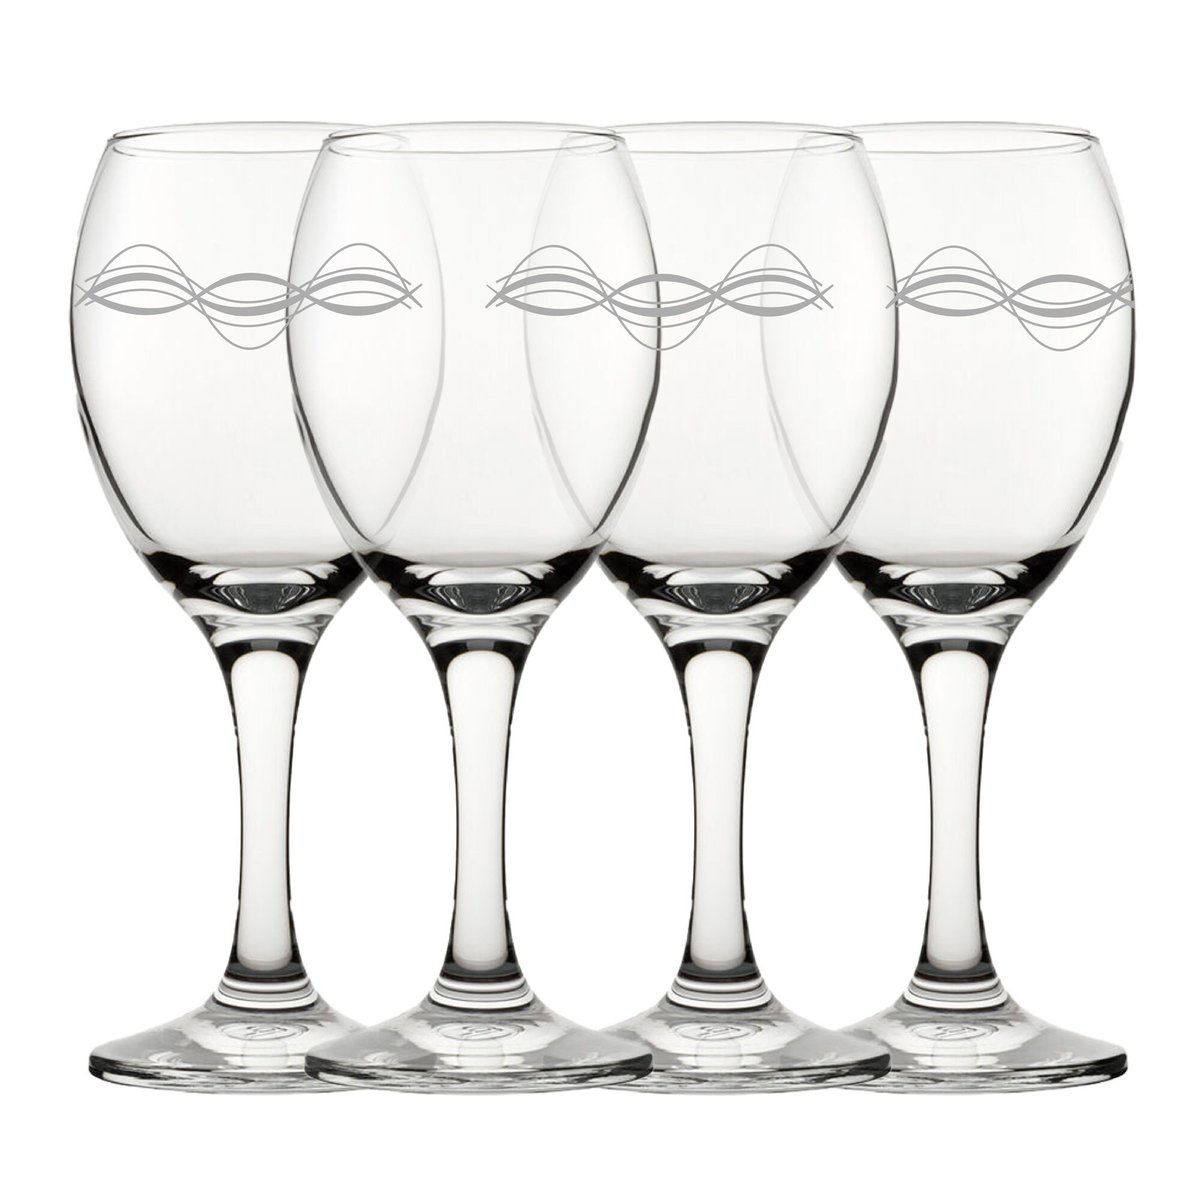 xclusivegiftsuk.etsy.com/listing/158785…
#drinkingglasses #glasses #giftideas #gift